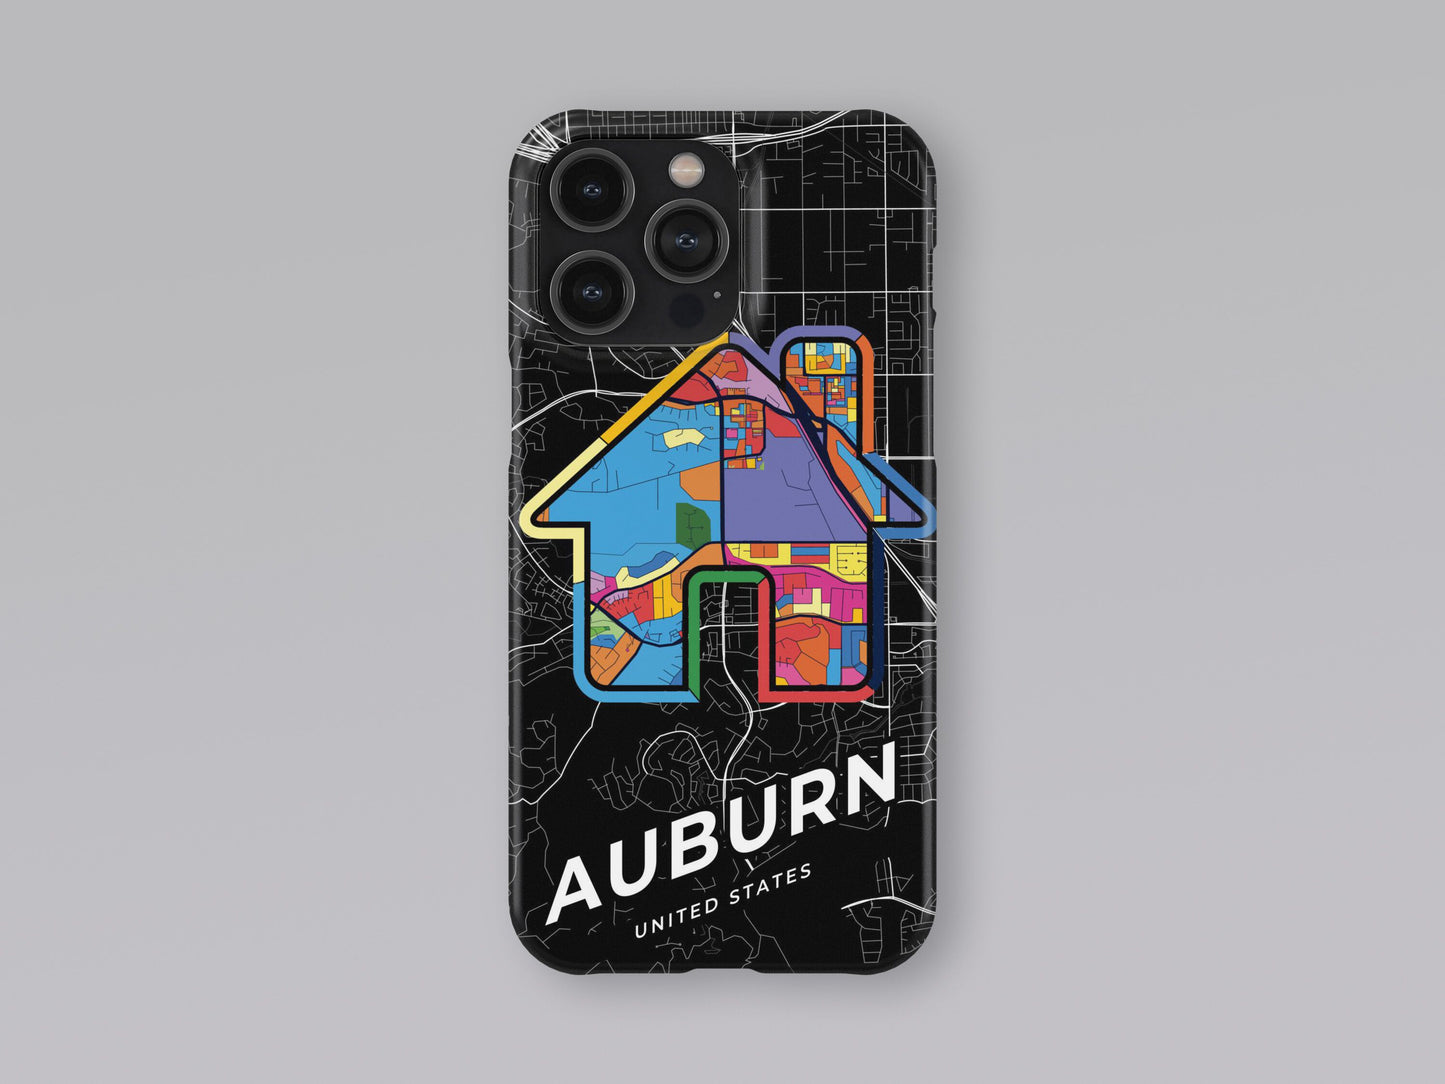 Auburn Washington slim phone case with colorful icon. Birthday, wedding or housewarming gift. Couple match cases. 3